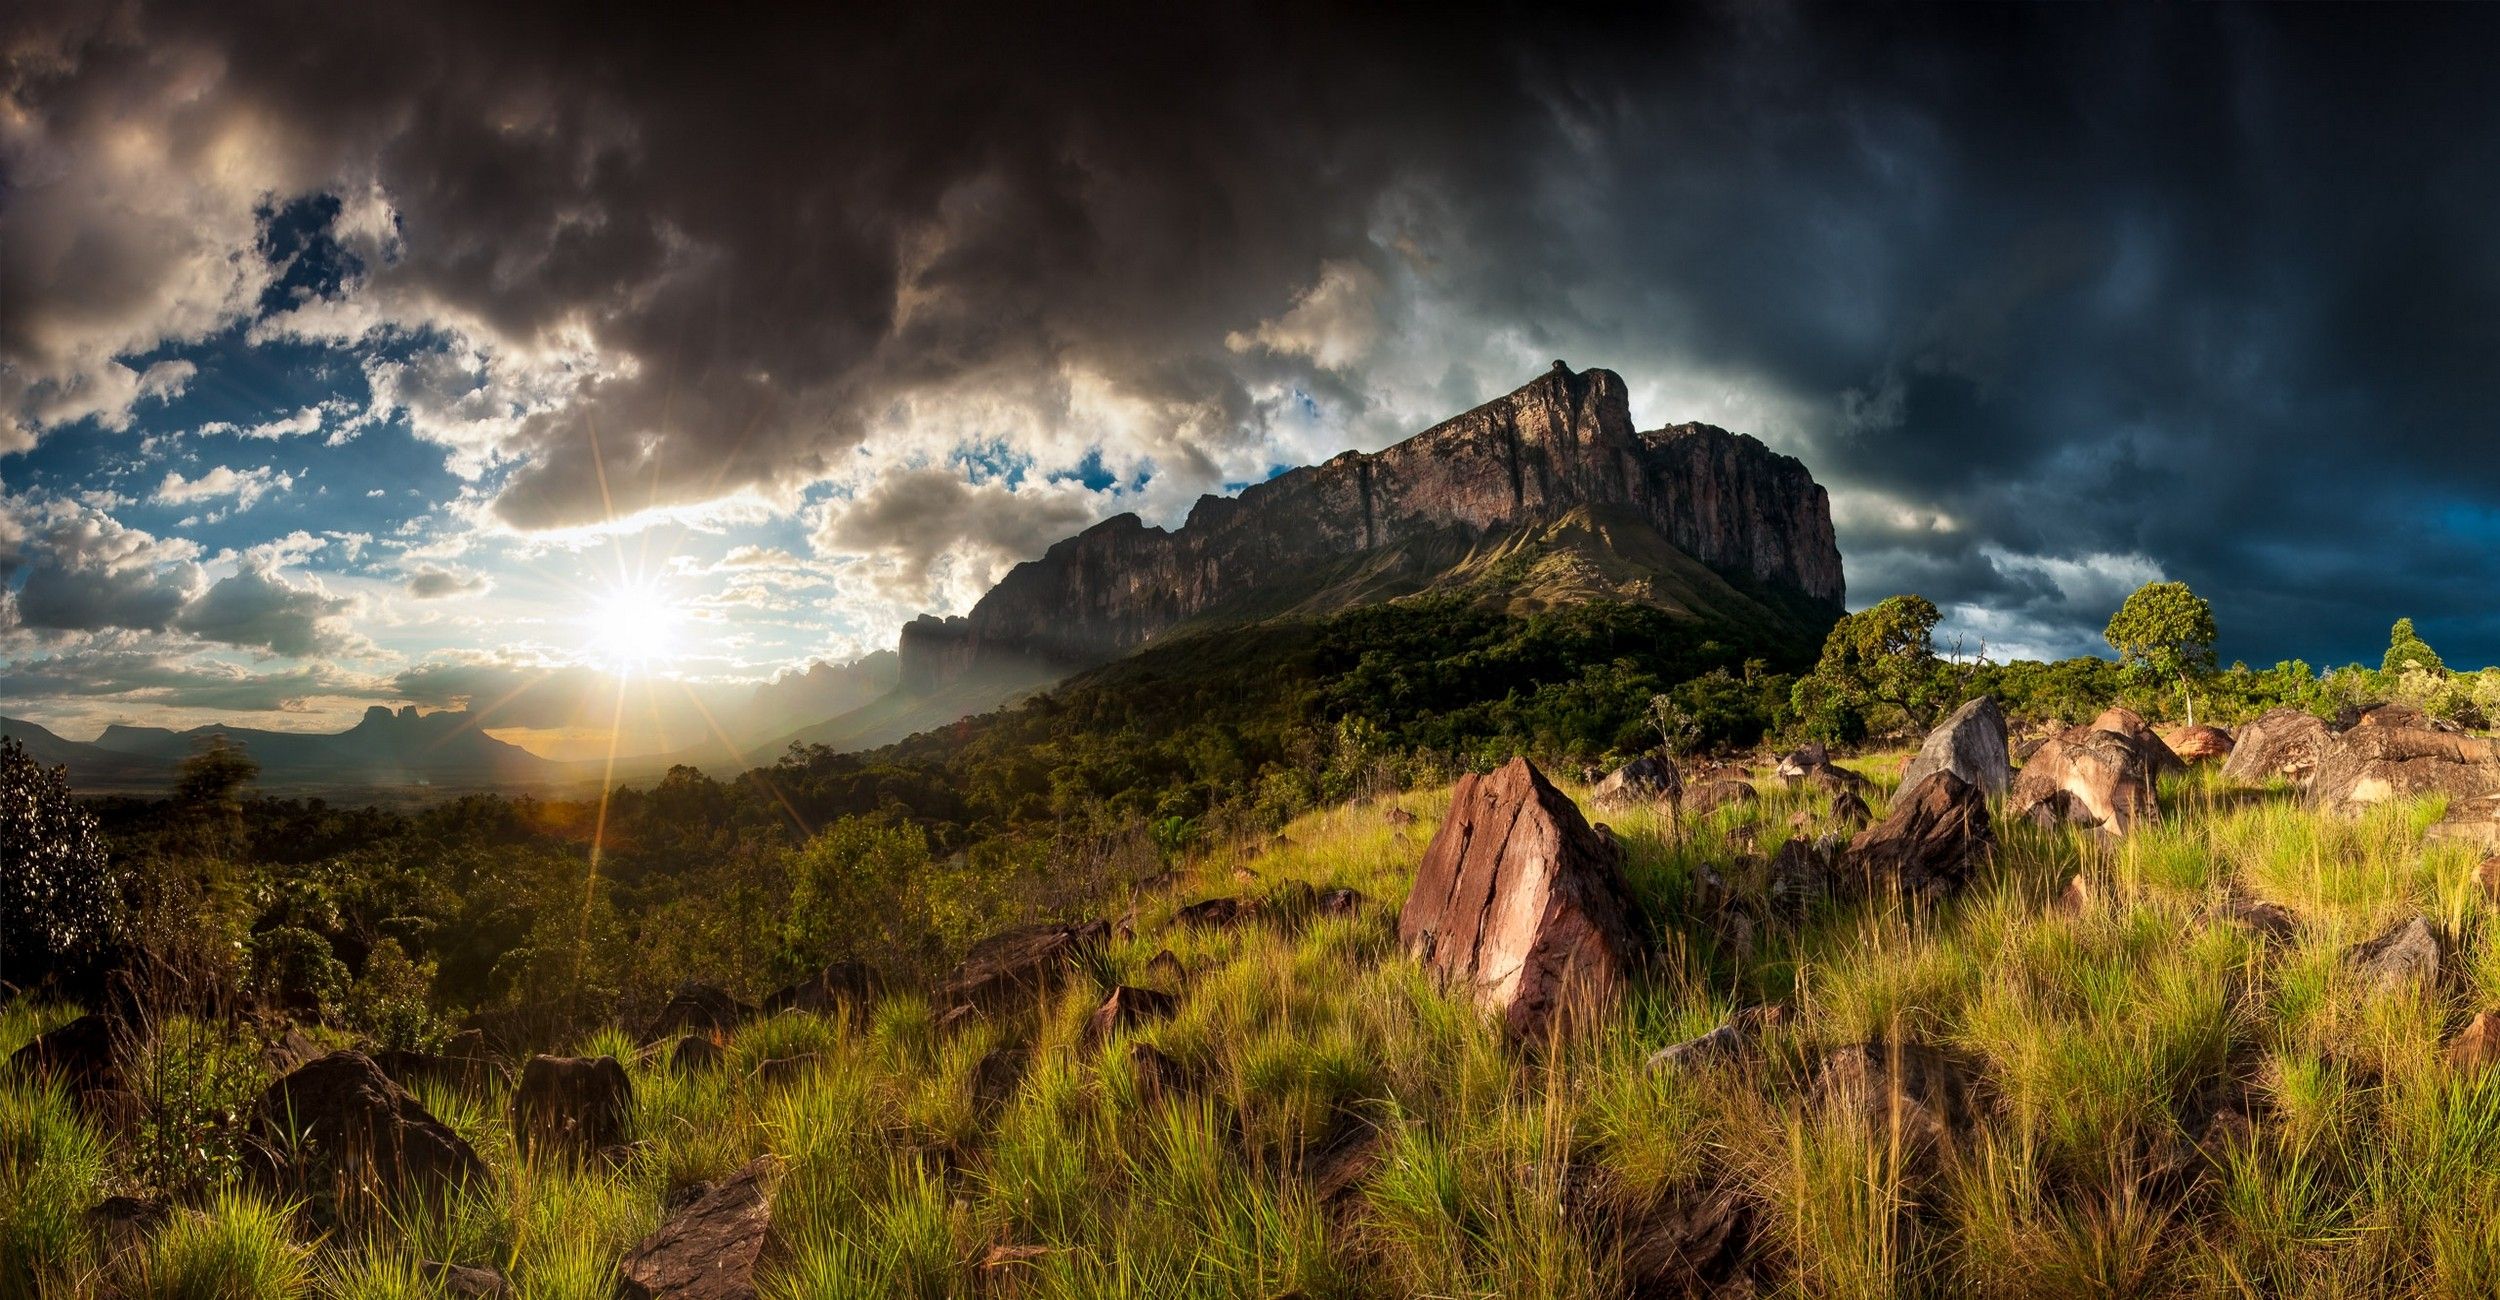 4558165 #sky, #Venezuela, #nature, #cliff, #HDR, #forest, #clouds